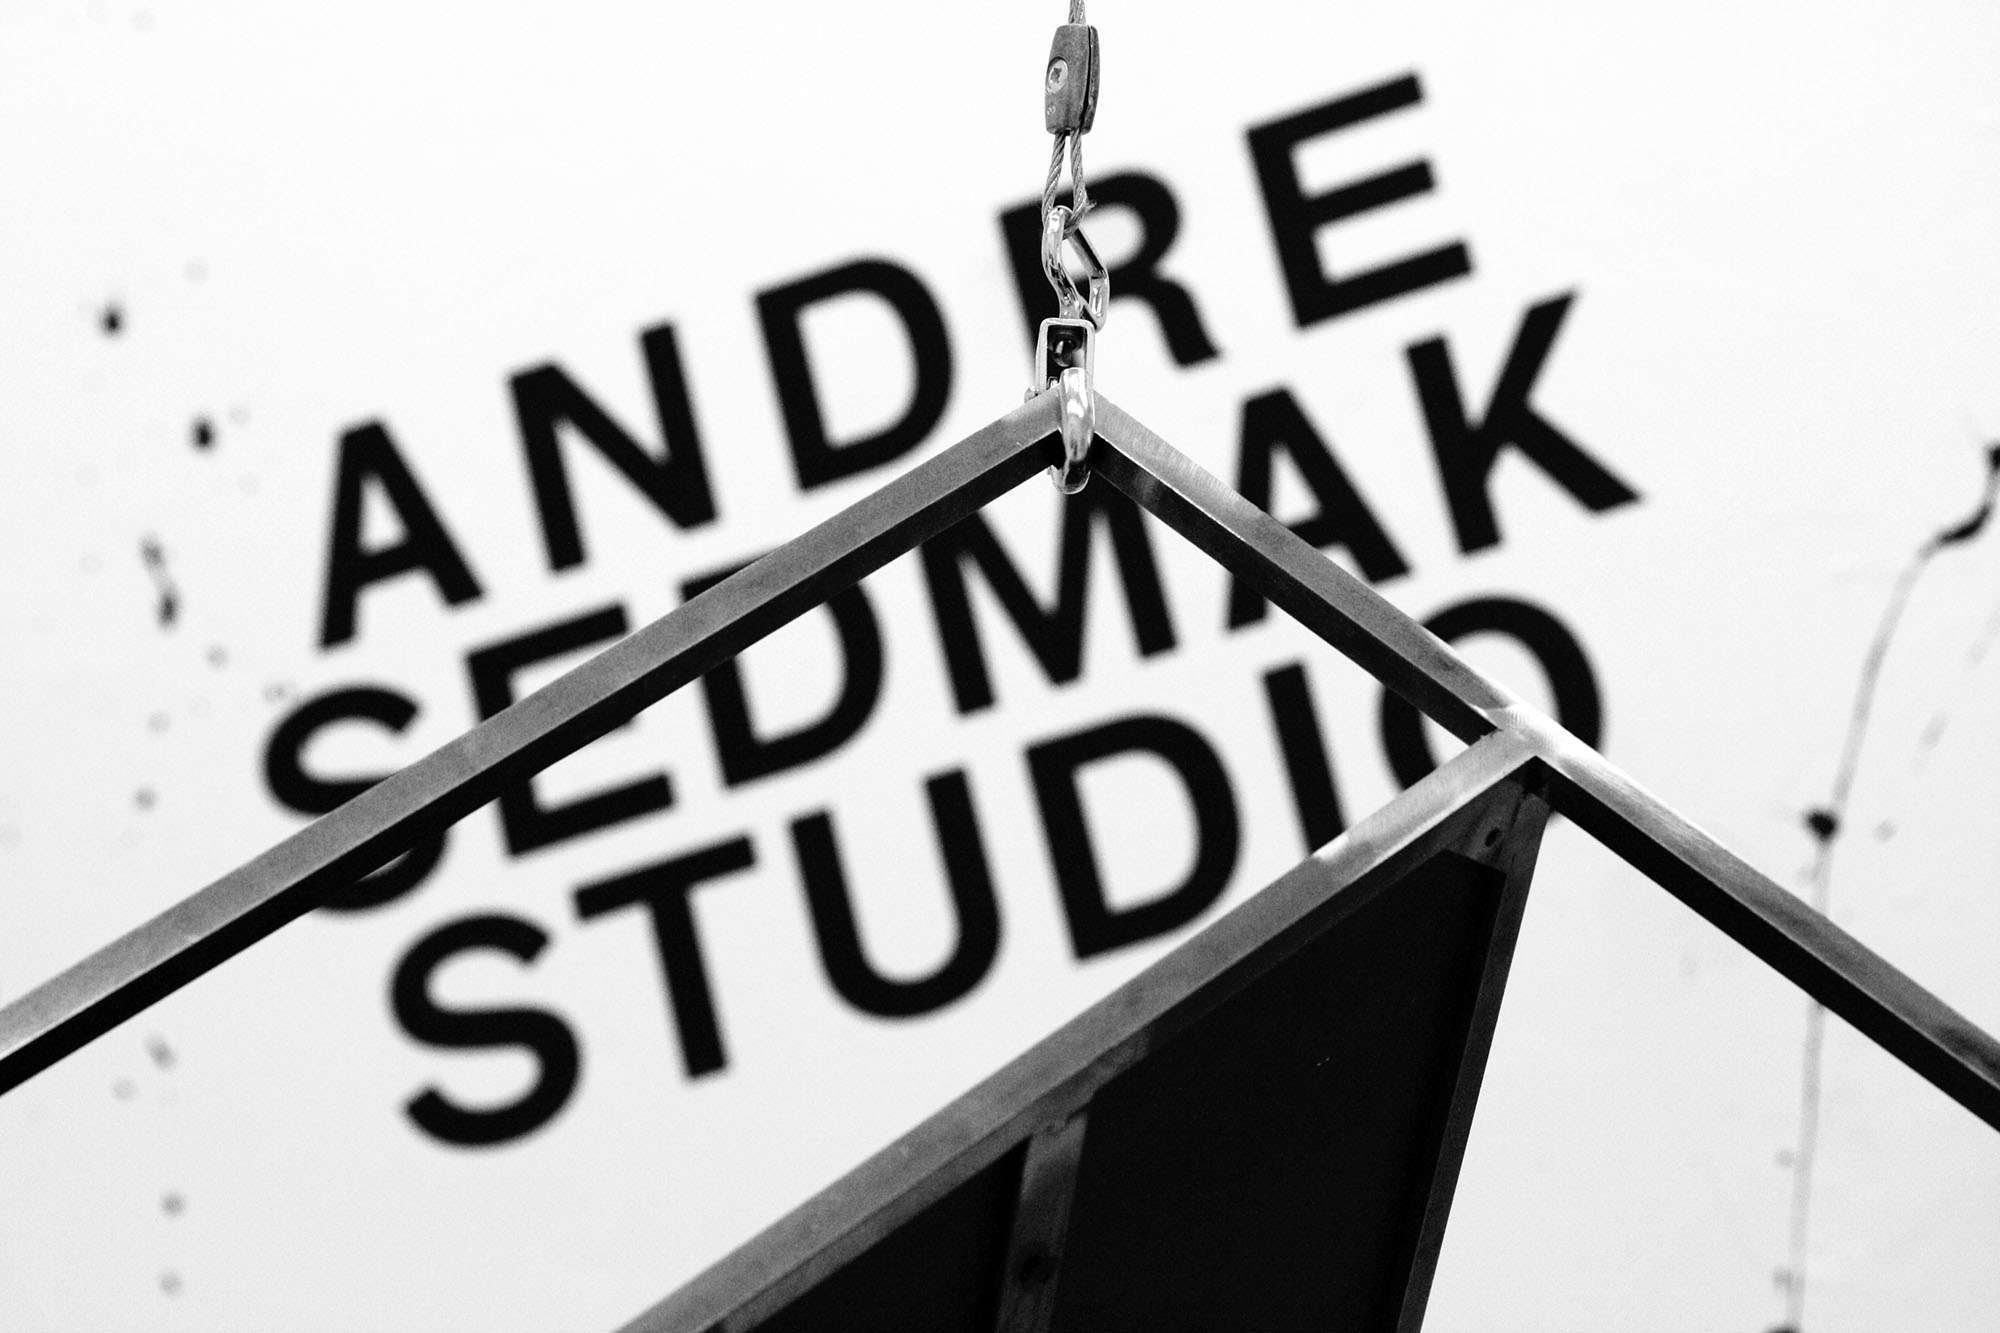 Miroslavo's Photography: Andre Sedmak Studio